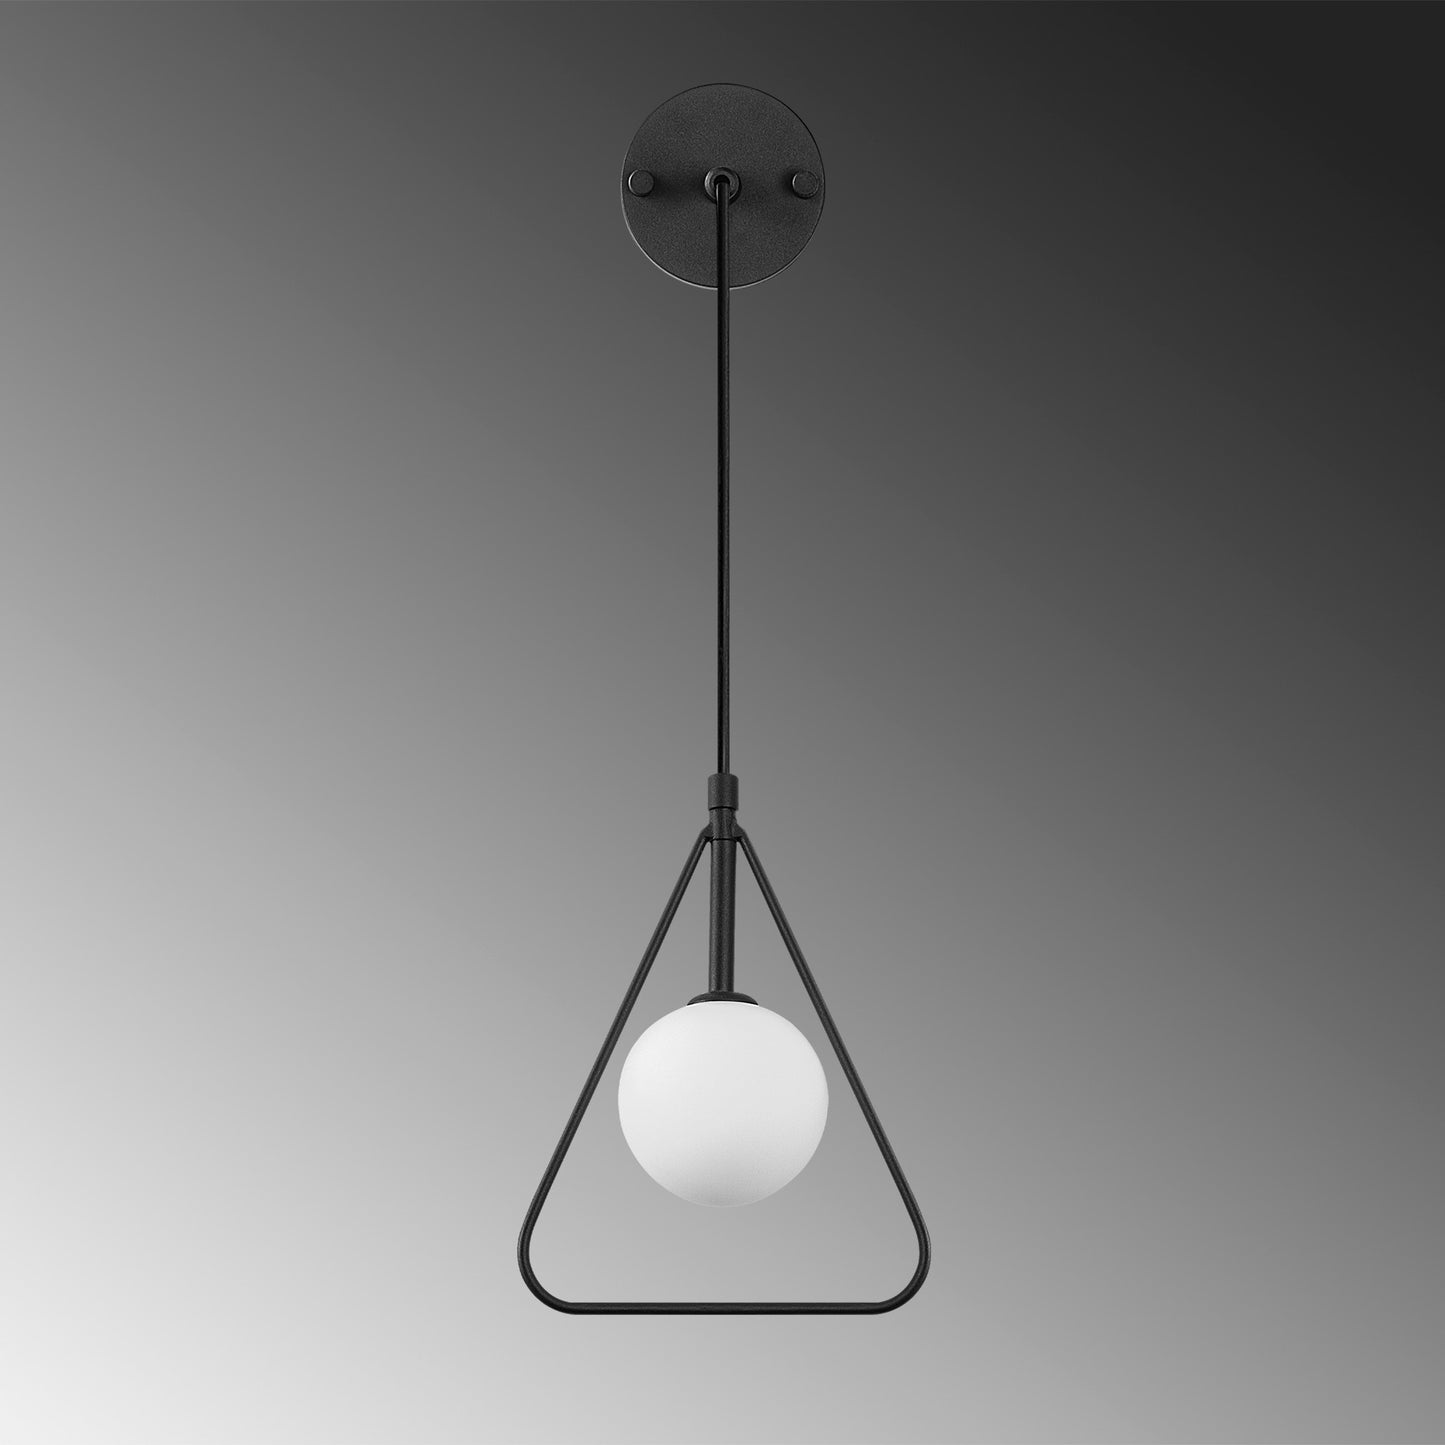 Væglampe Geometri - 11130 - Sort